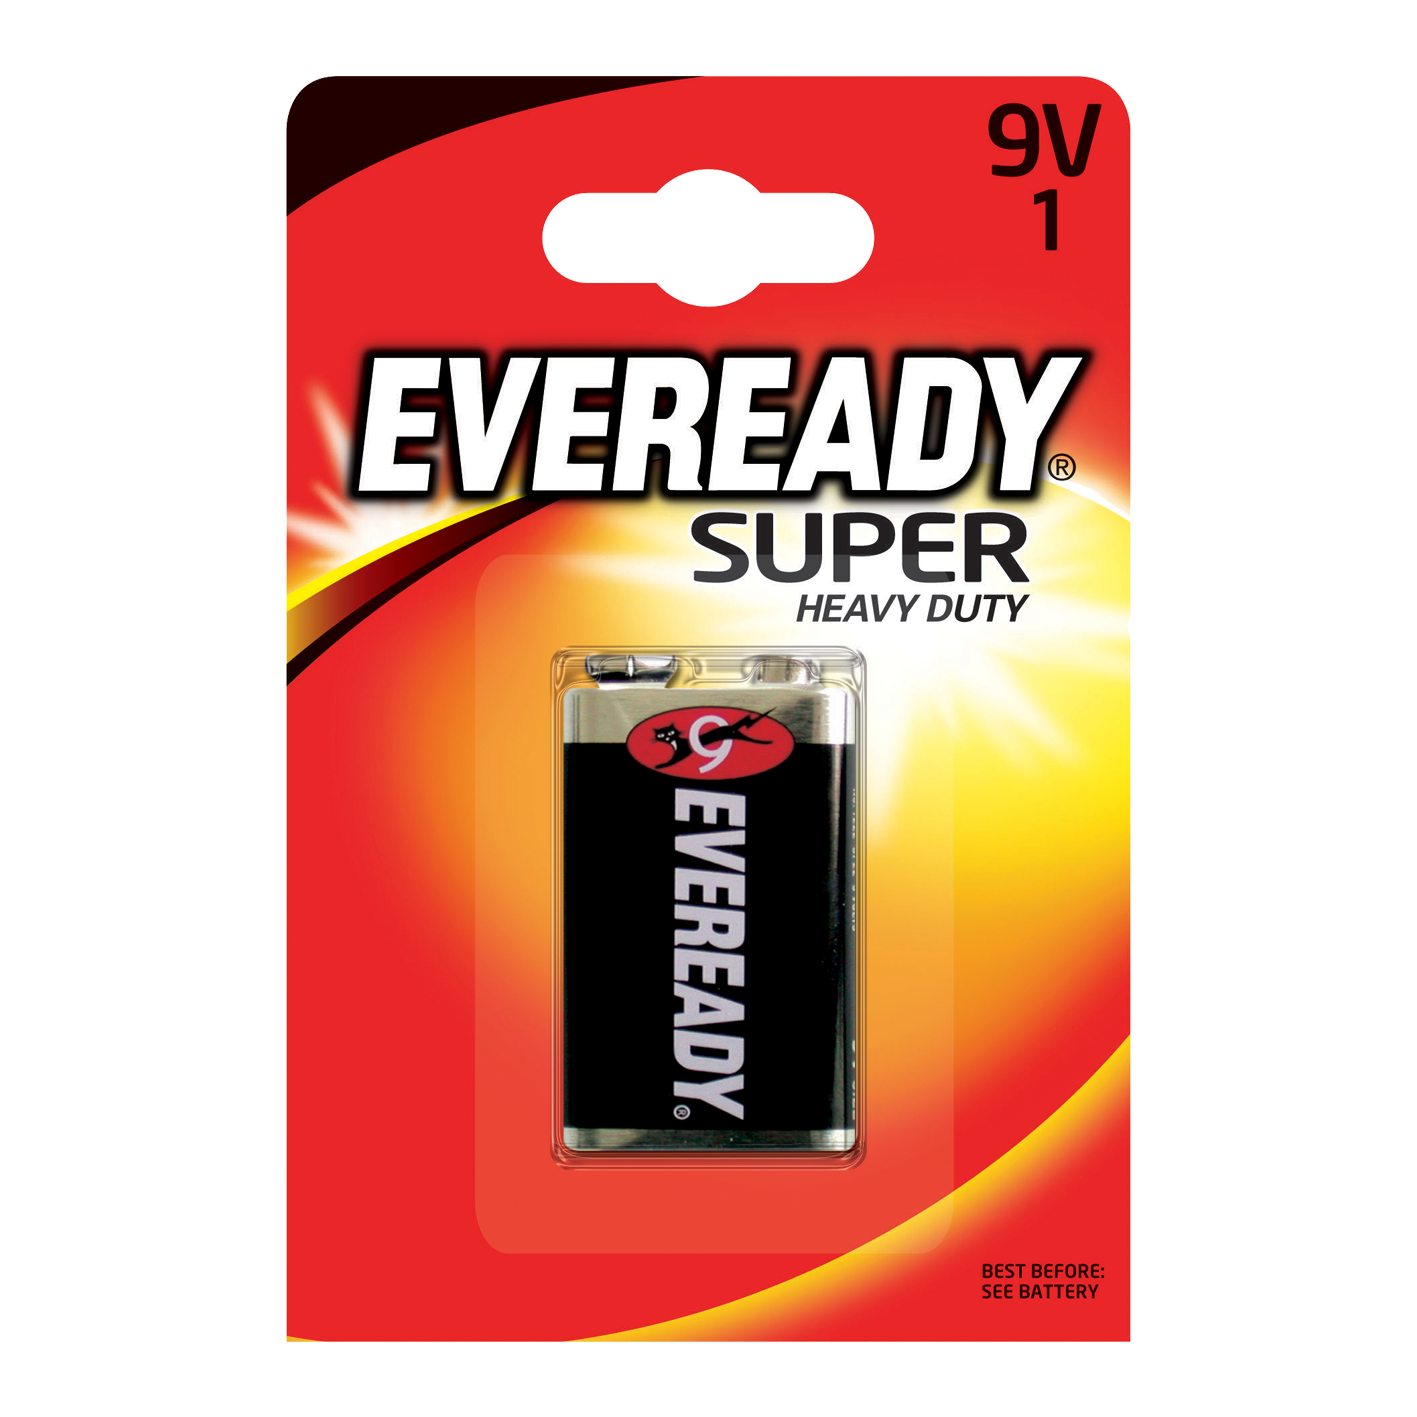 Eveready 9V Super Heavy Duty, Pack of 1